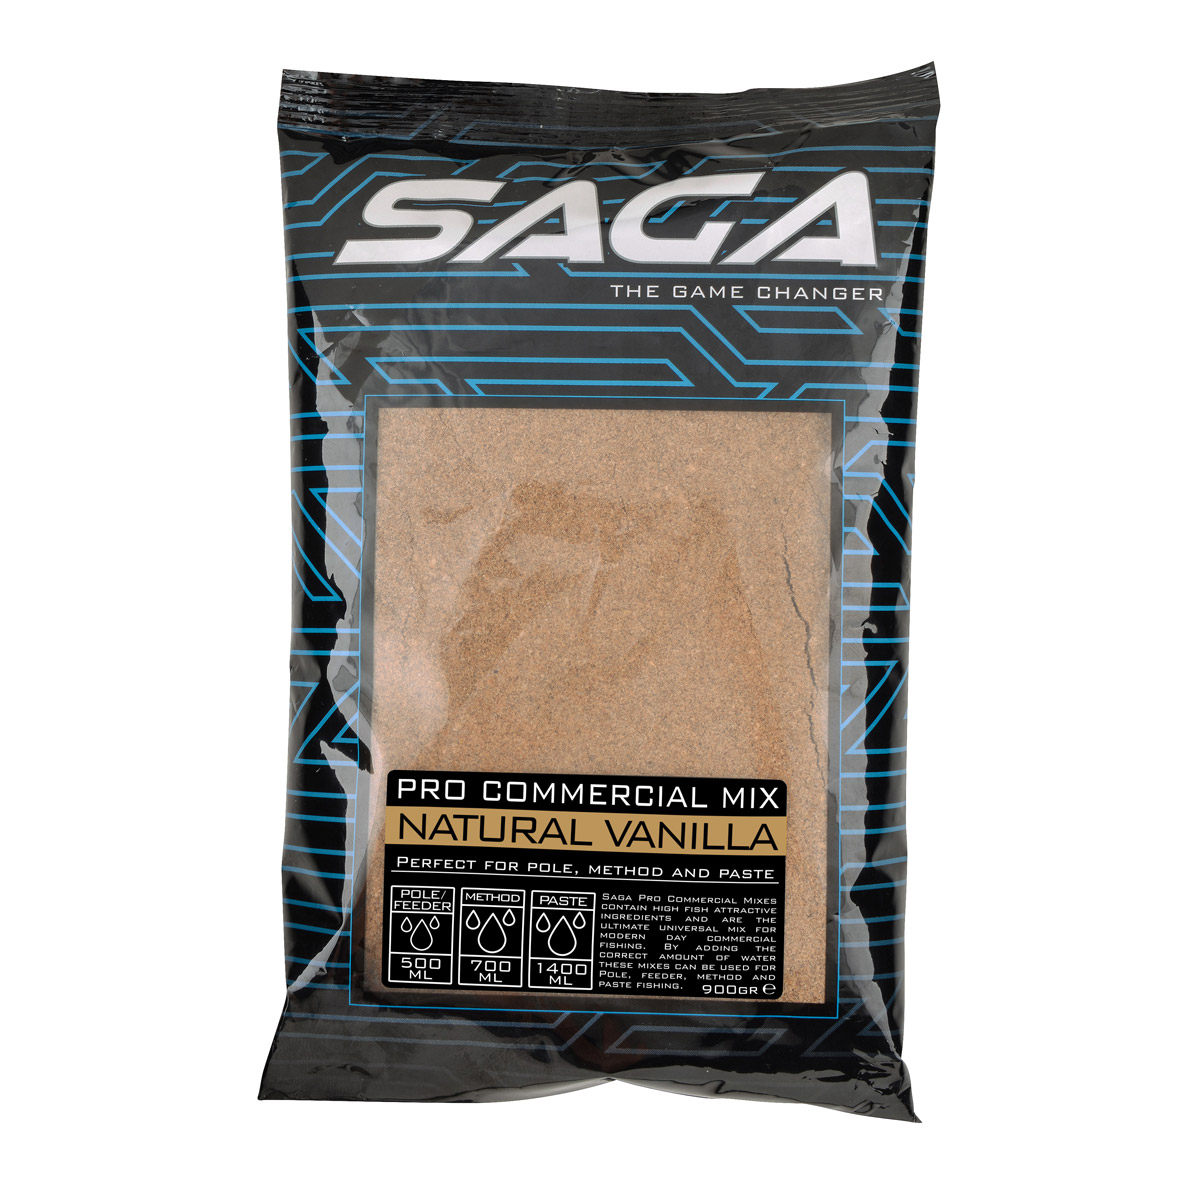 Spro Saga Pro Commercial Mix Natural Vanilla